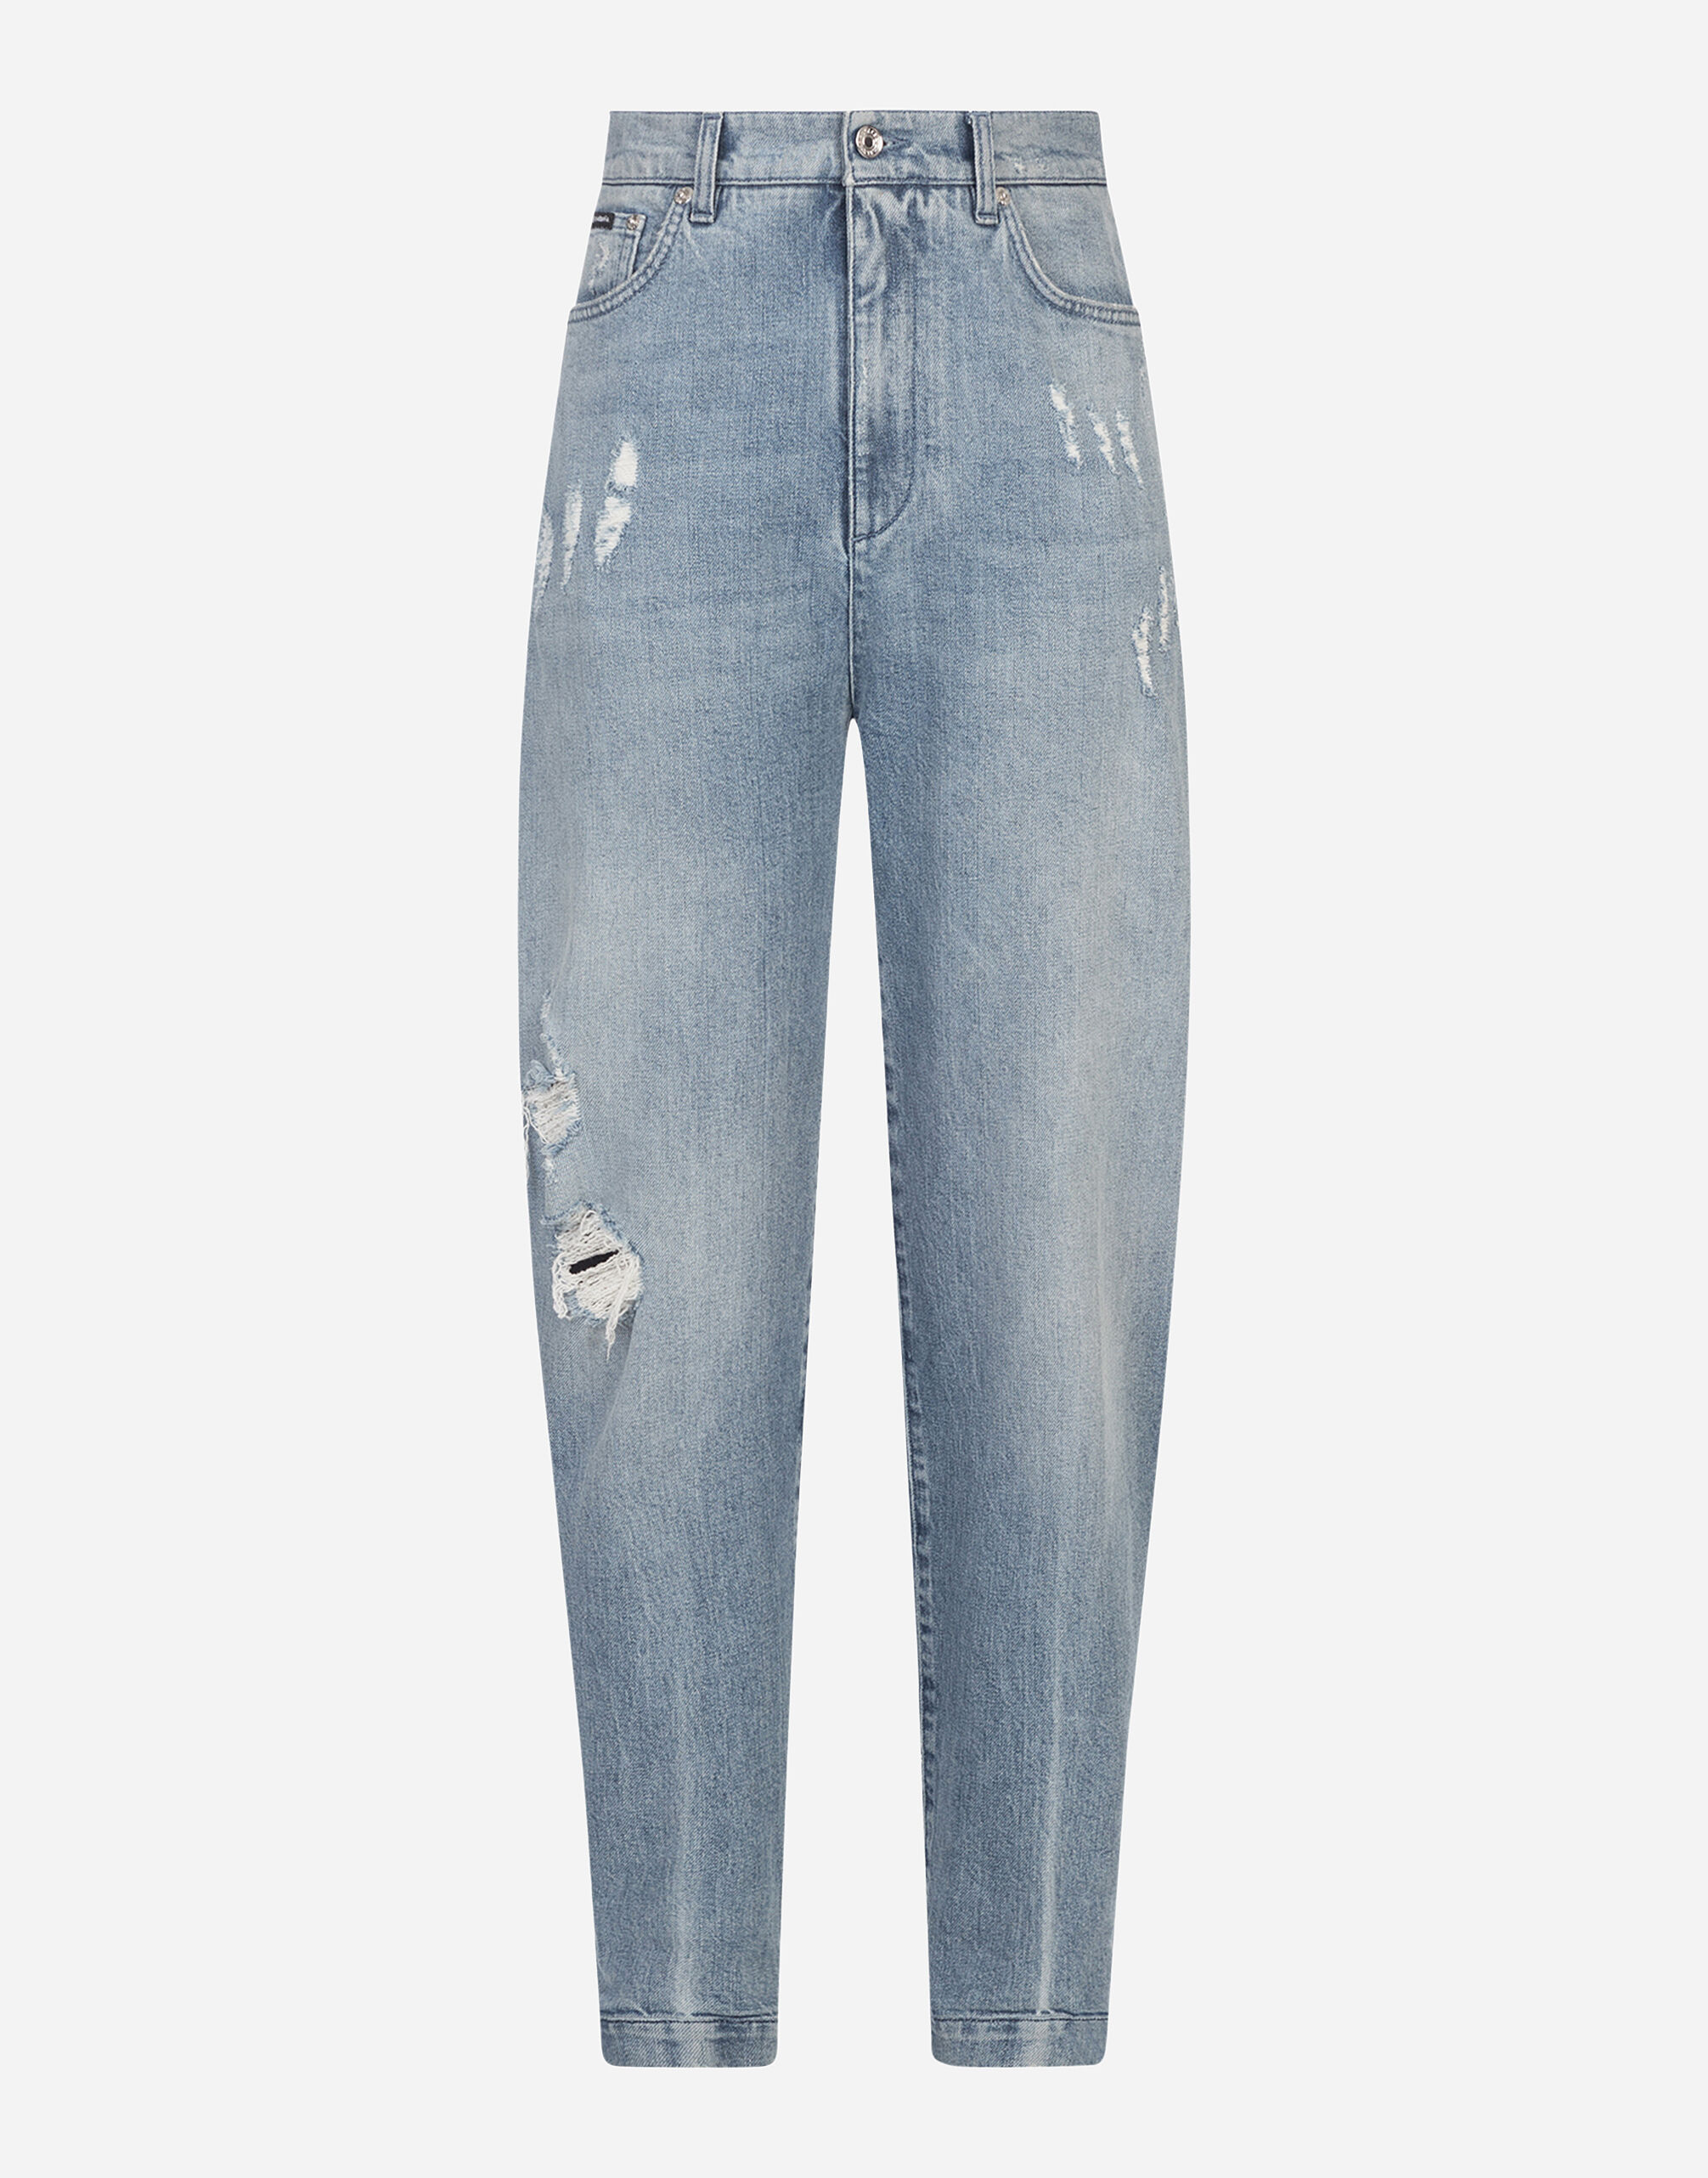 Dolce & Gabbana Boyfriend jeans in light blue denim with rips Multicolor FTCOJDG8HL8